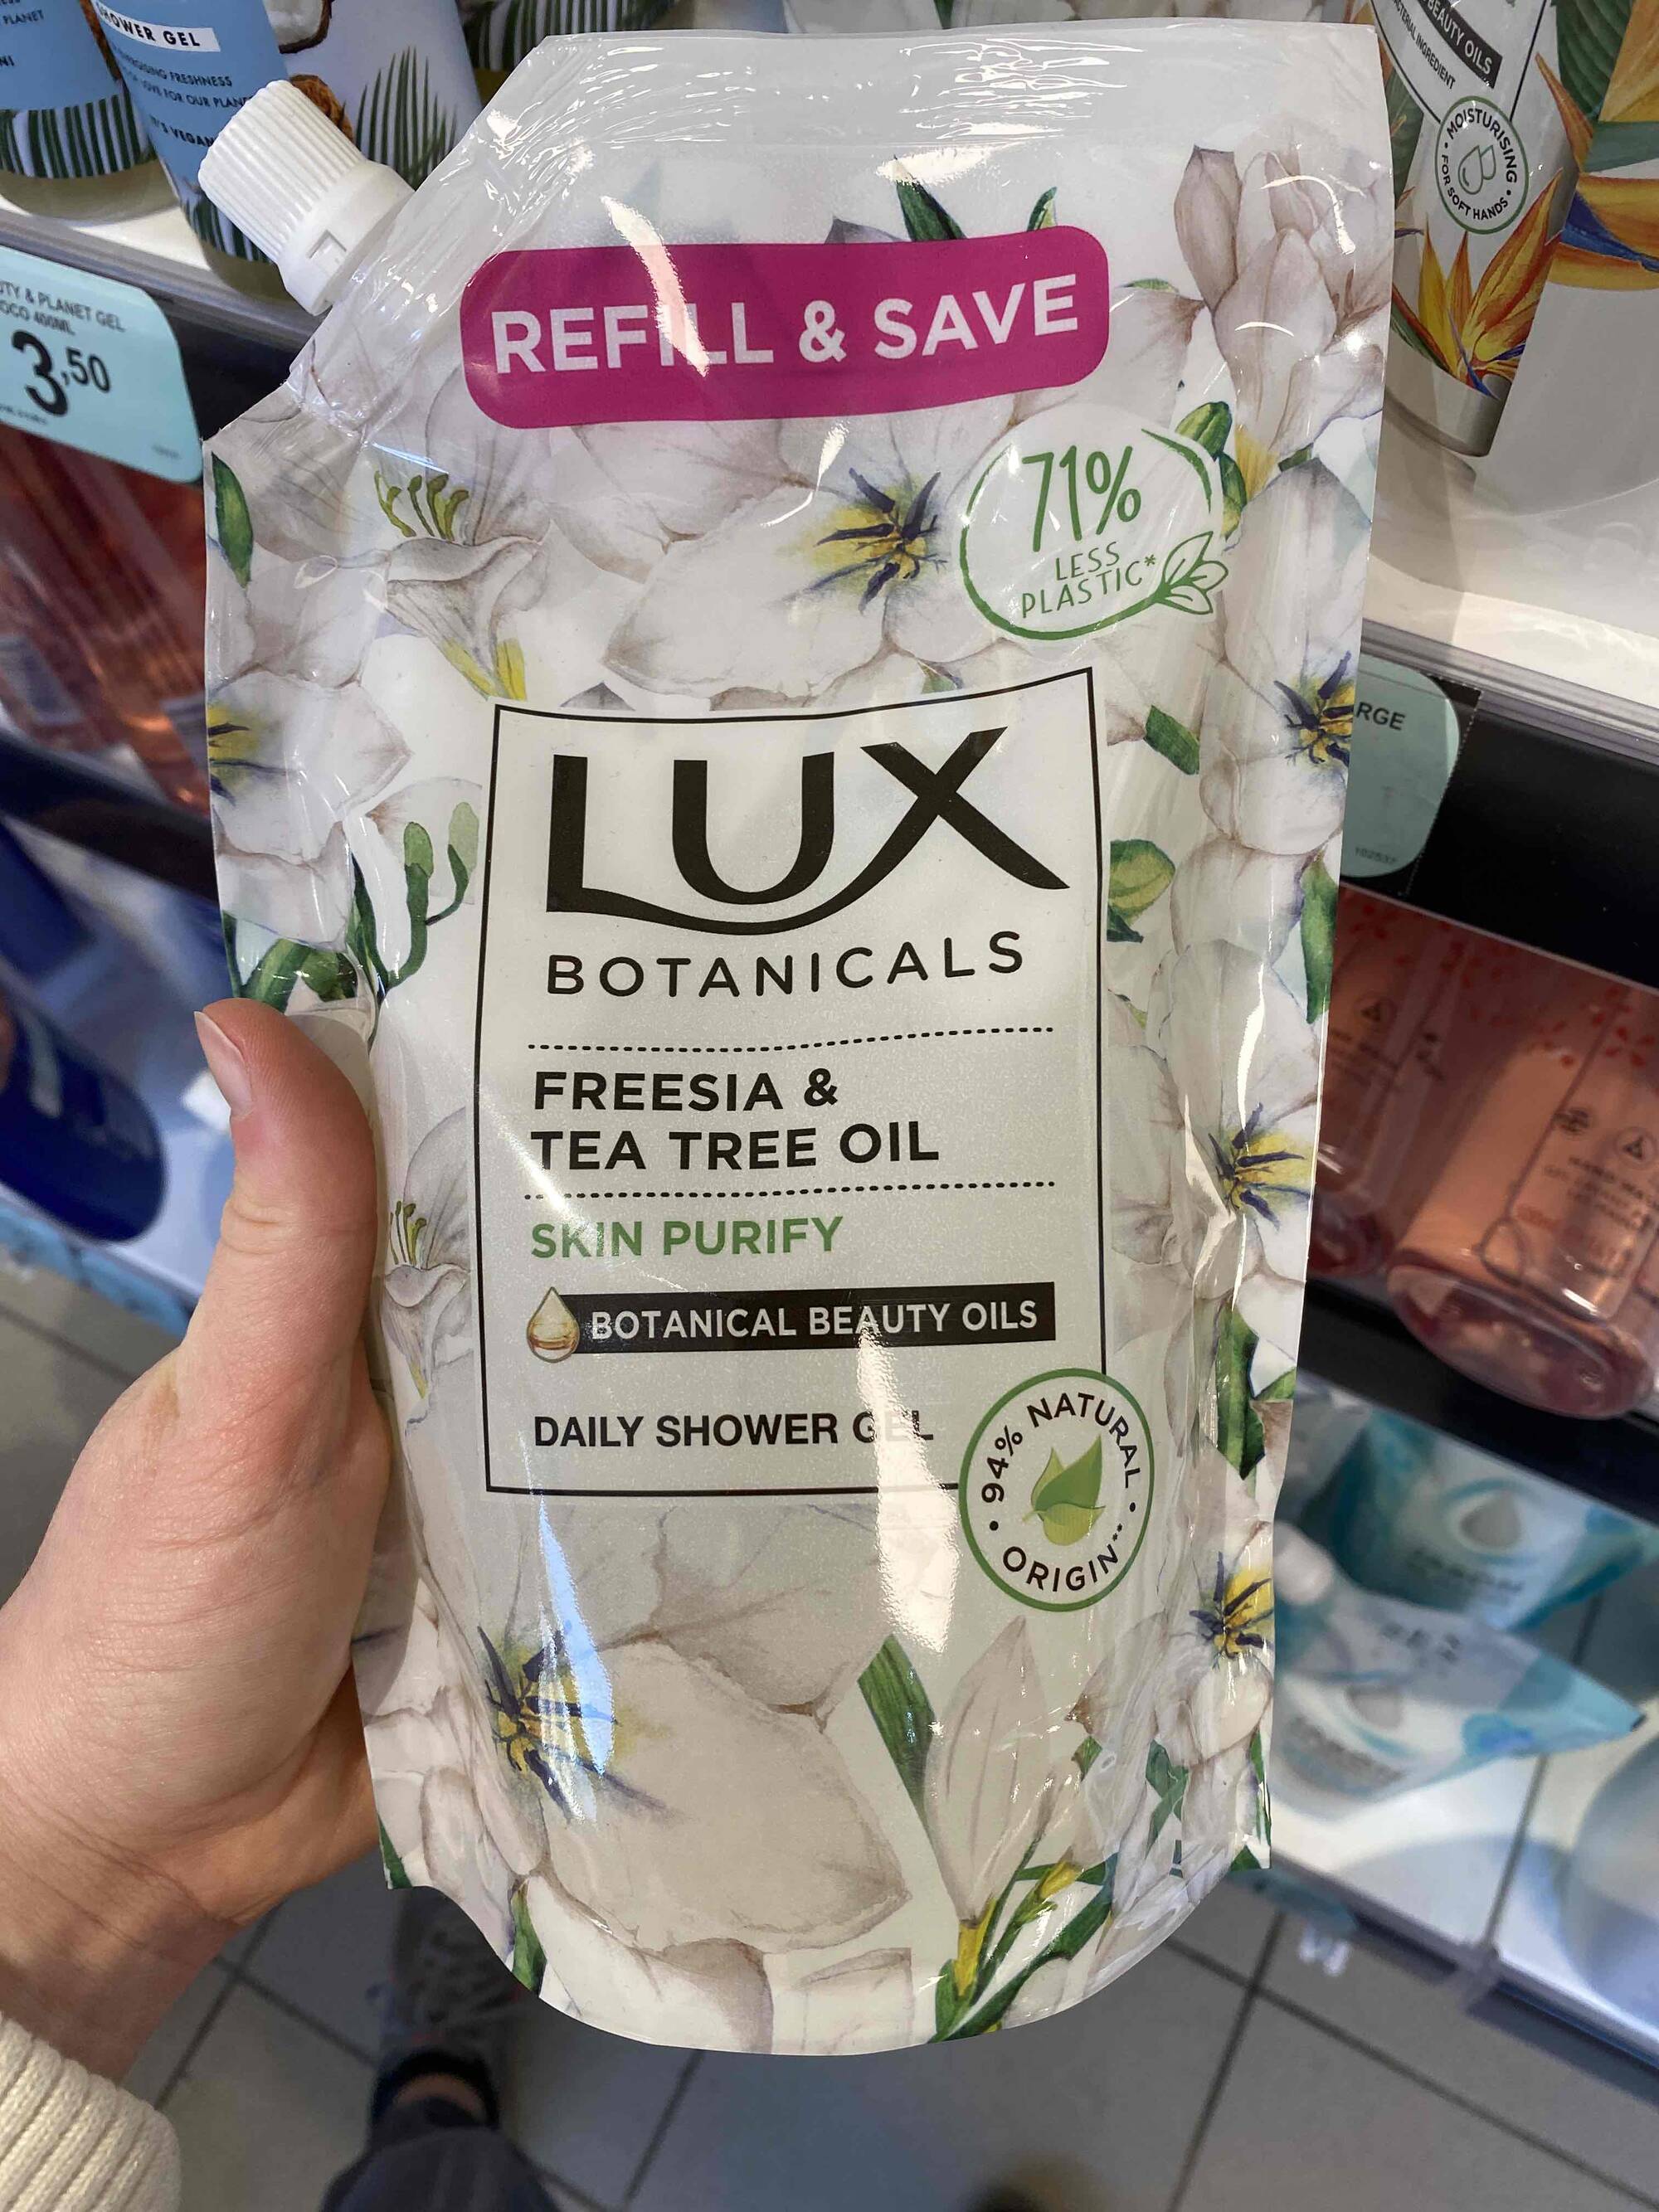 LUX - Daily shower gel freesia & tea tree oil